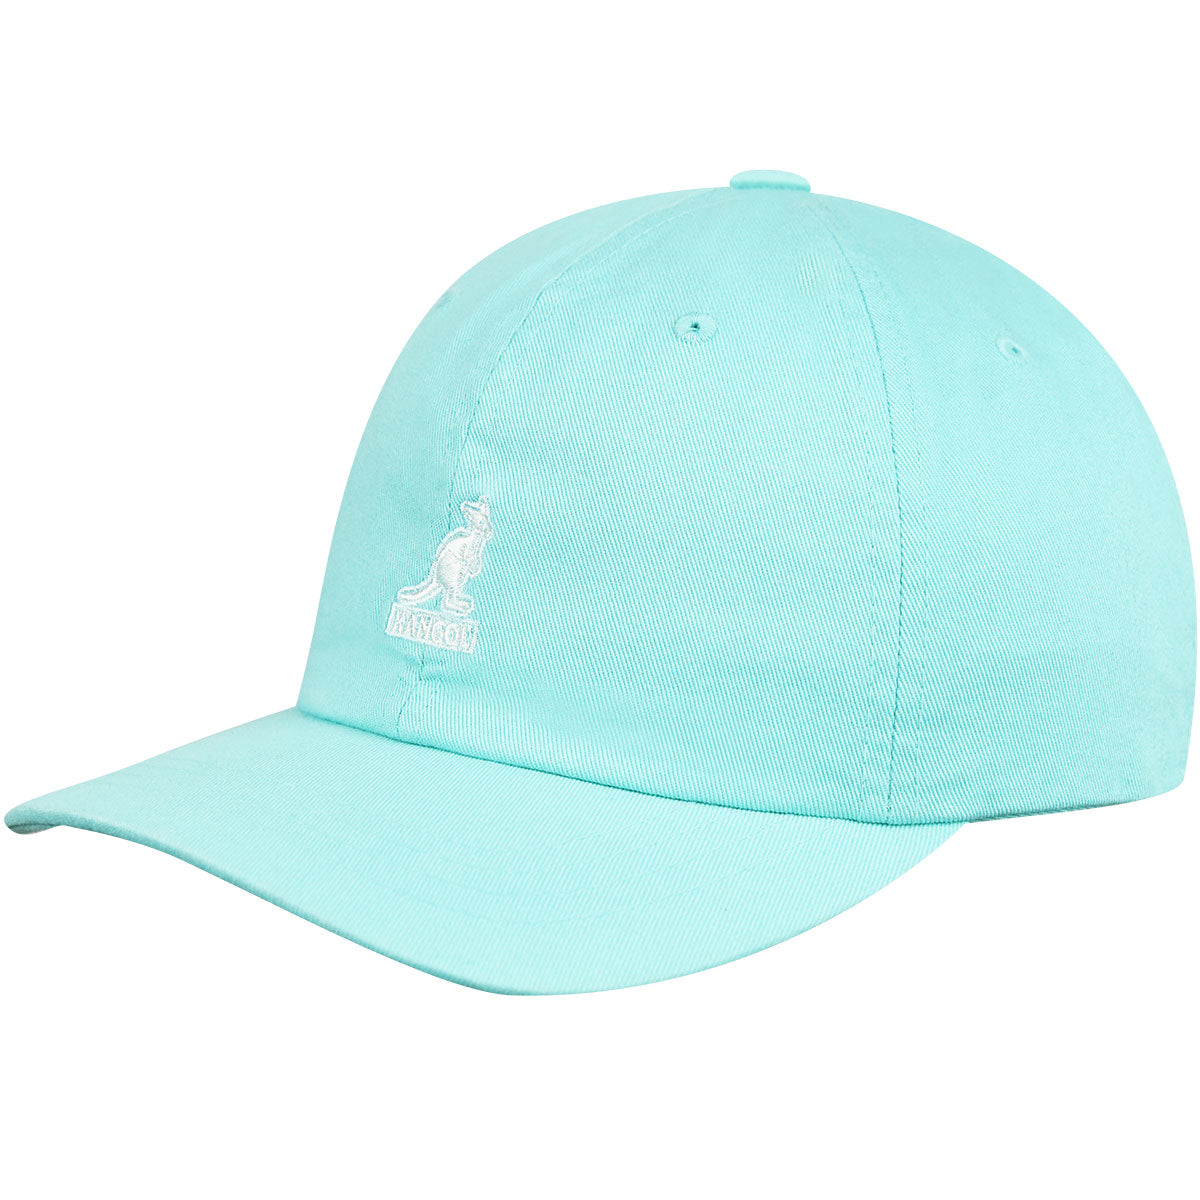 Kangol Washed Baseball cap blue tint